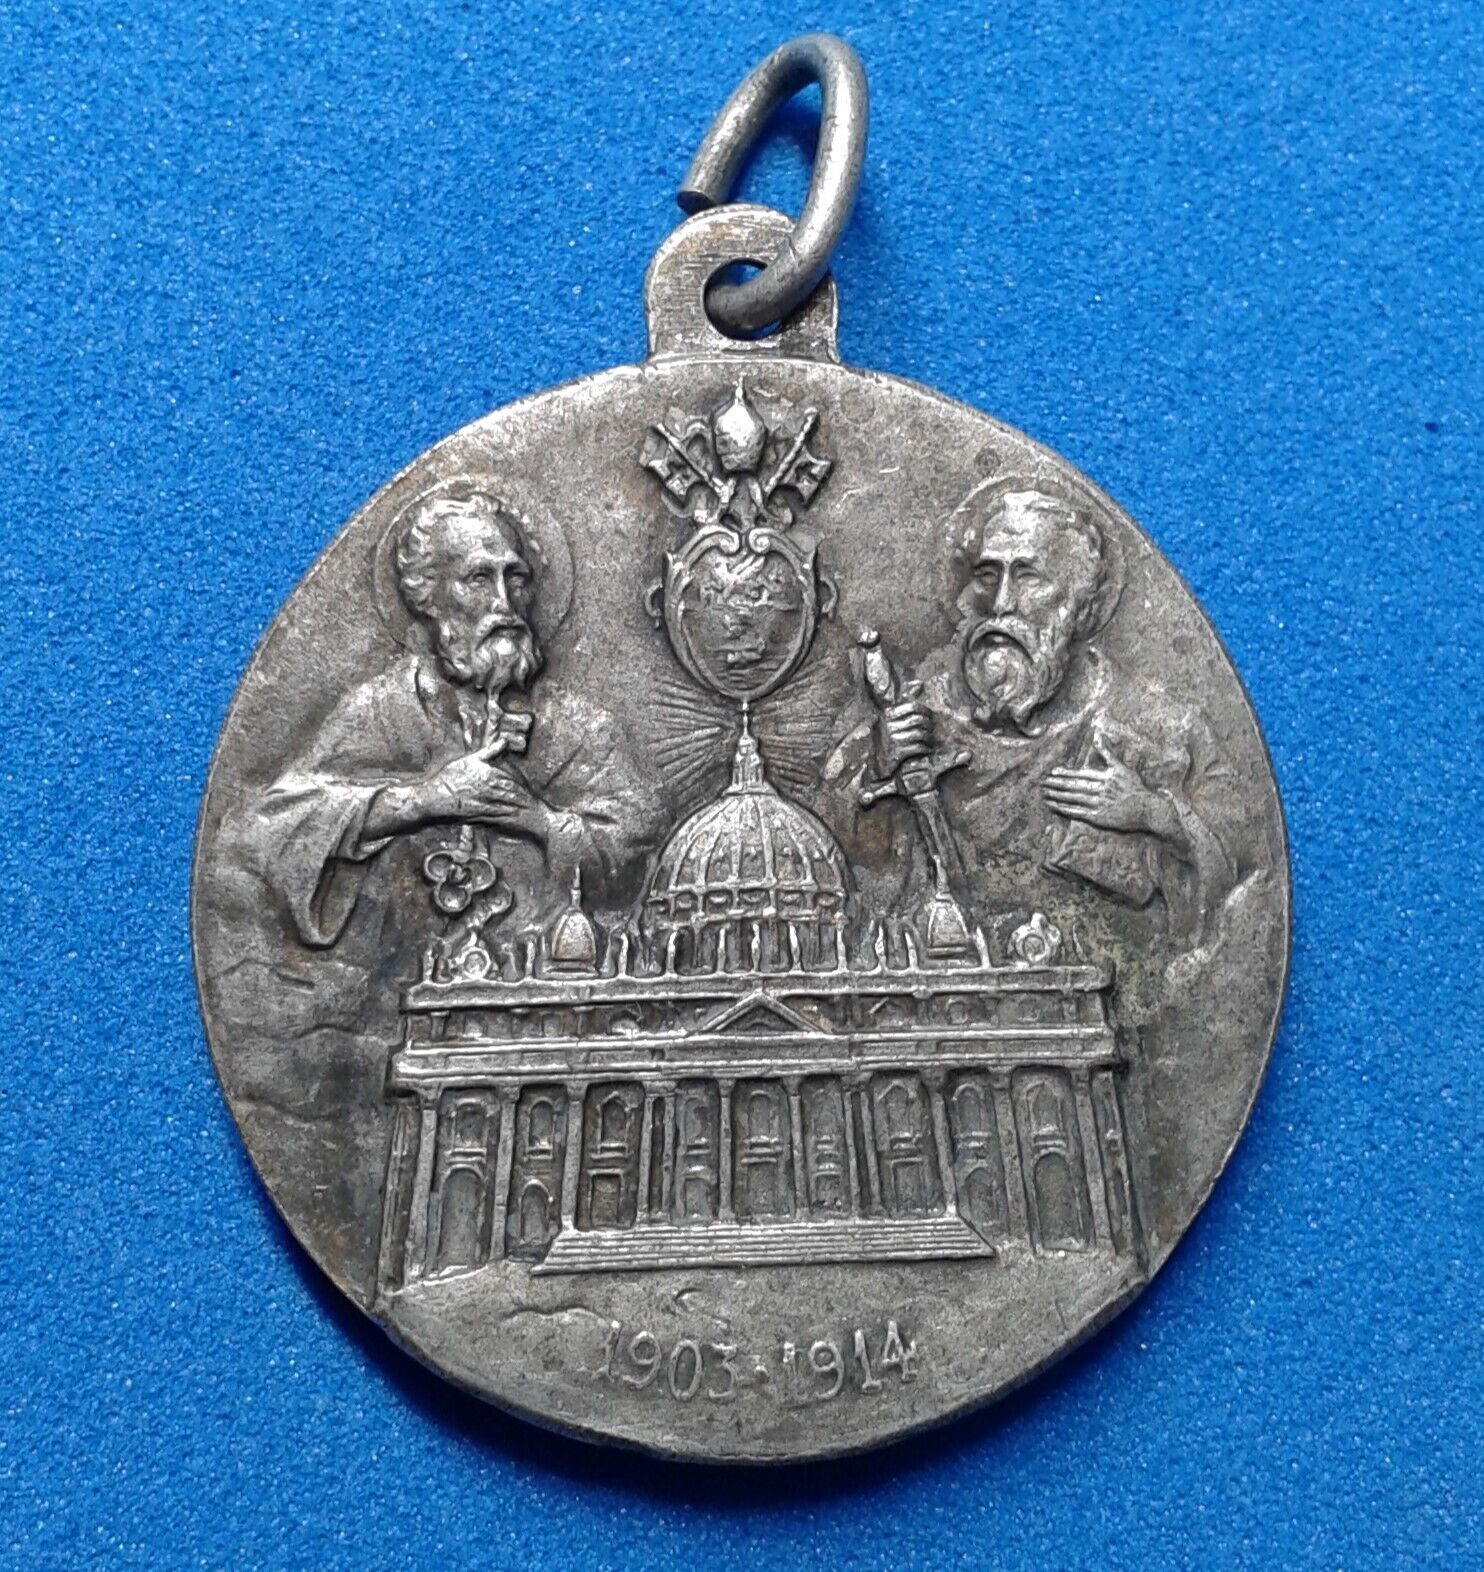 Vintage Catholic Medallion Saints Peter and Paul 1903 - 1914. PIUS P.P.X